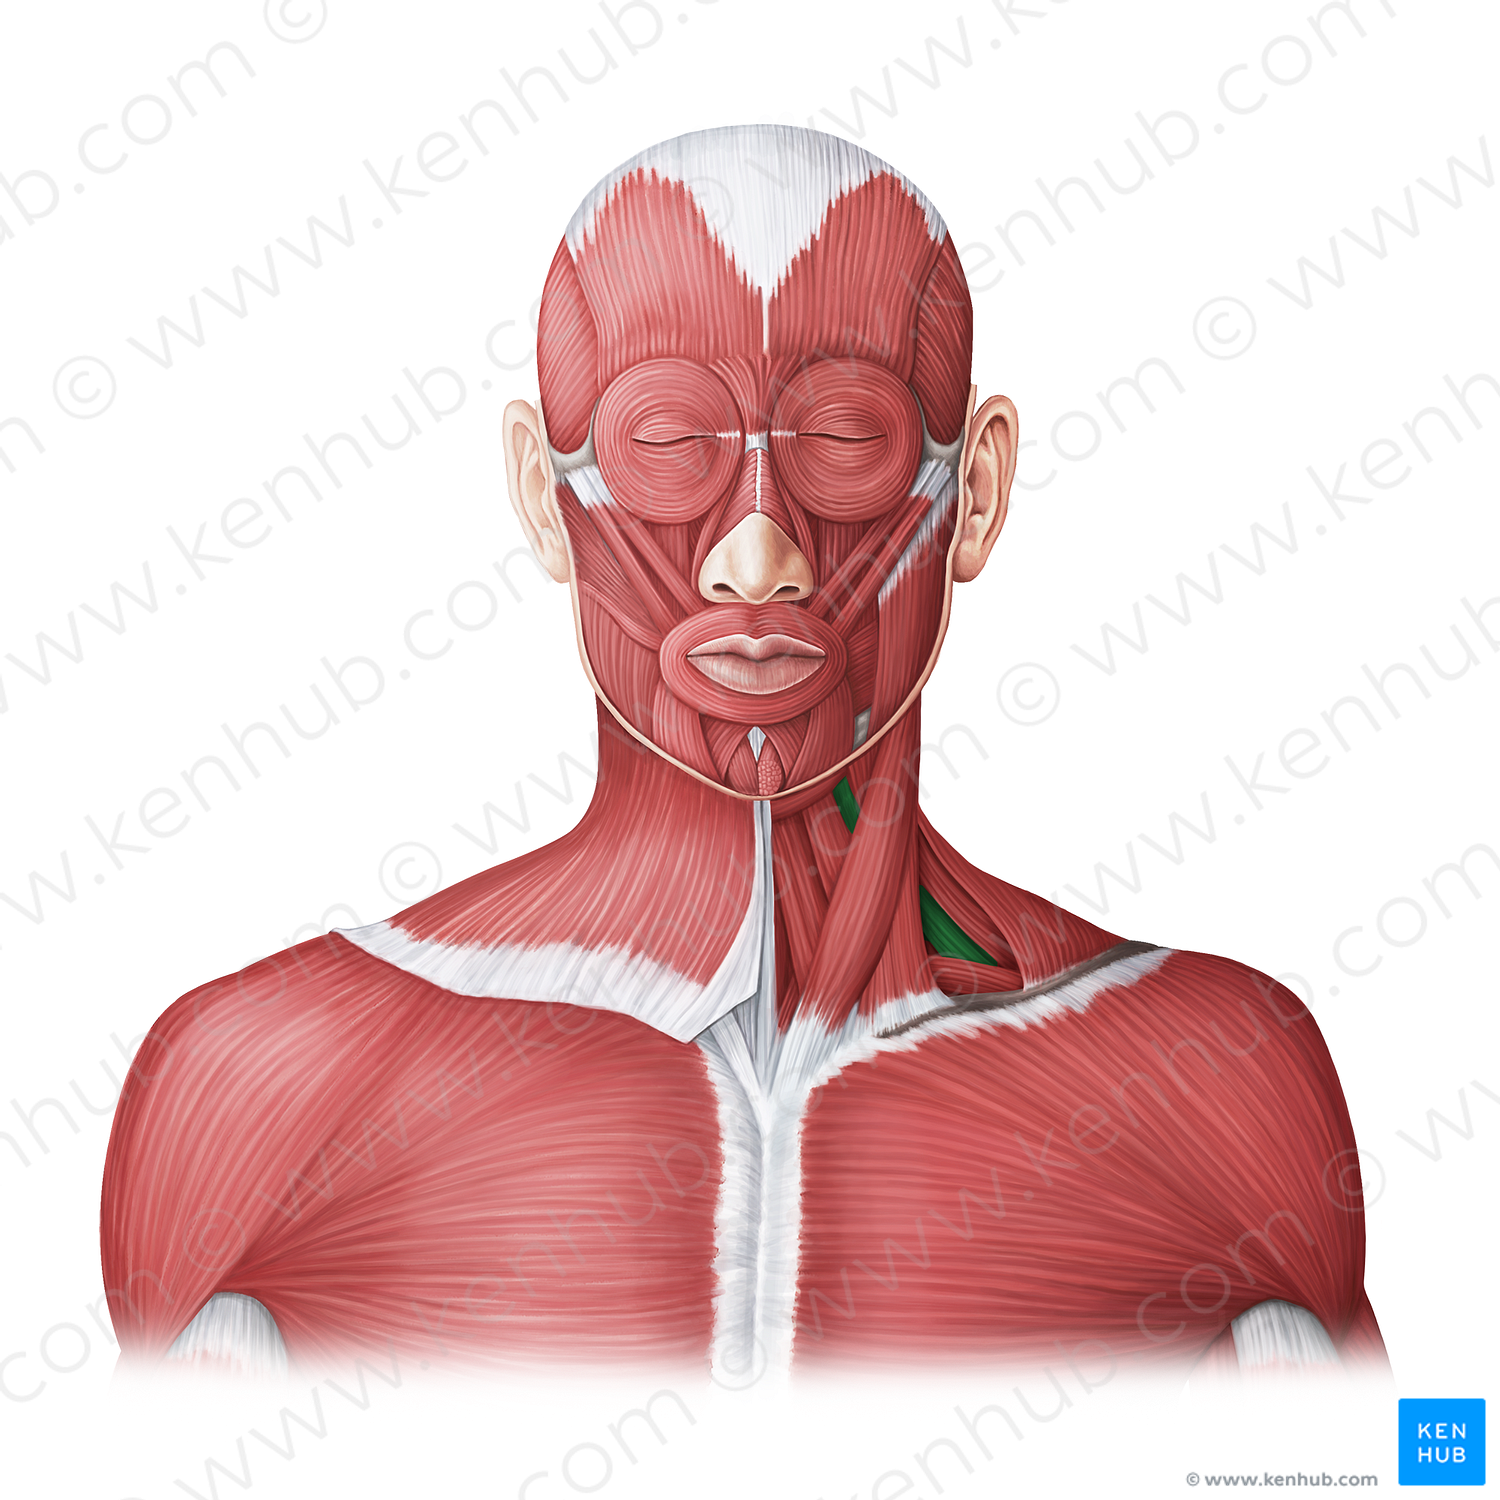 Scalenus anterior muscle (#20027)